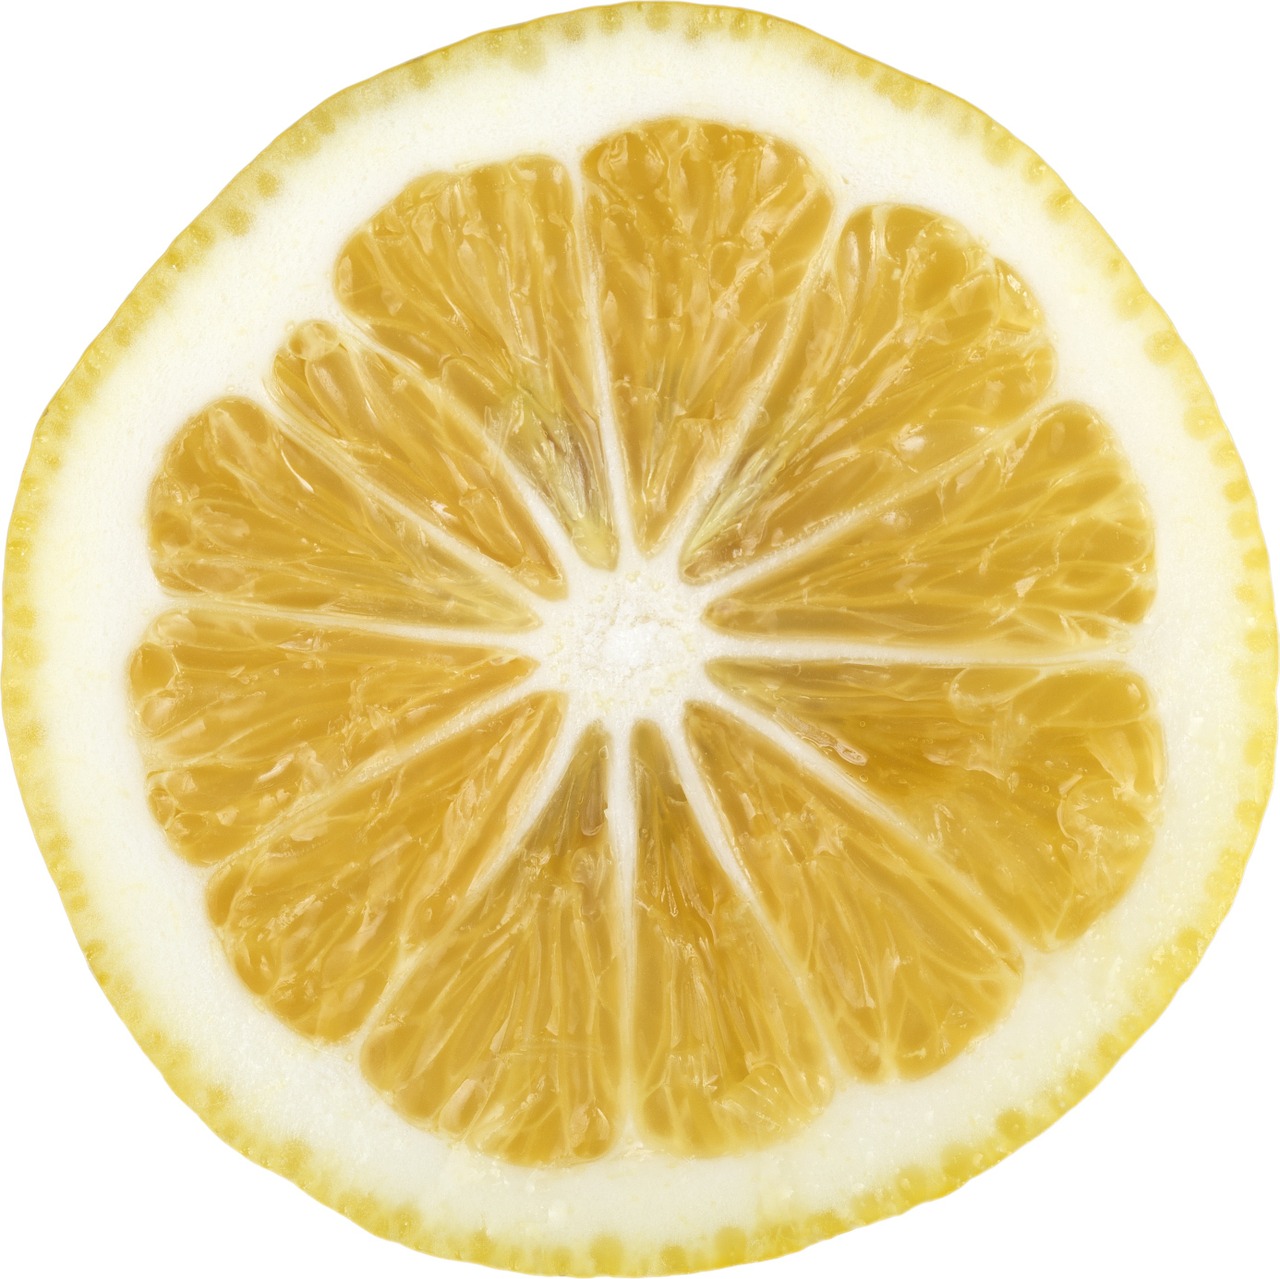 Passionfruit and Lemon Slice